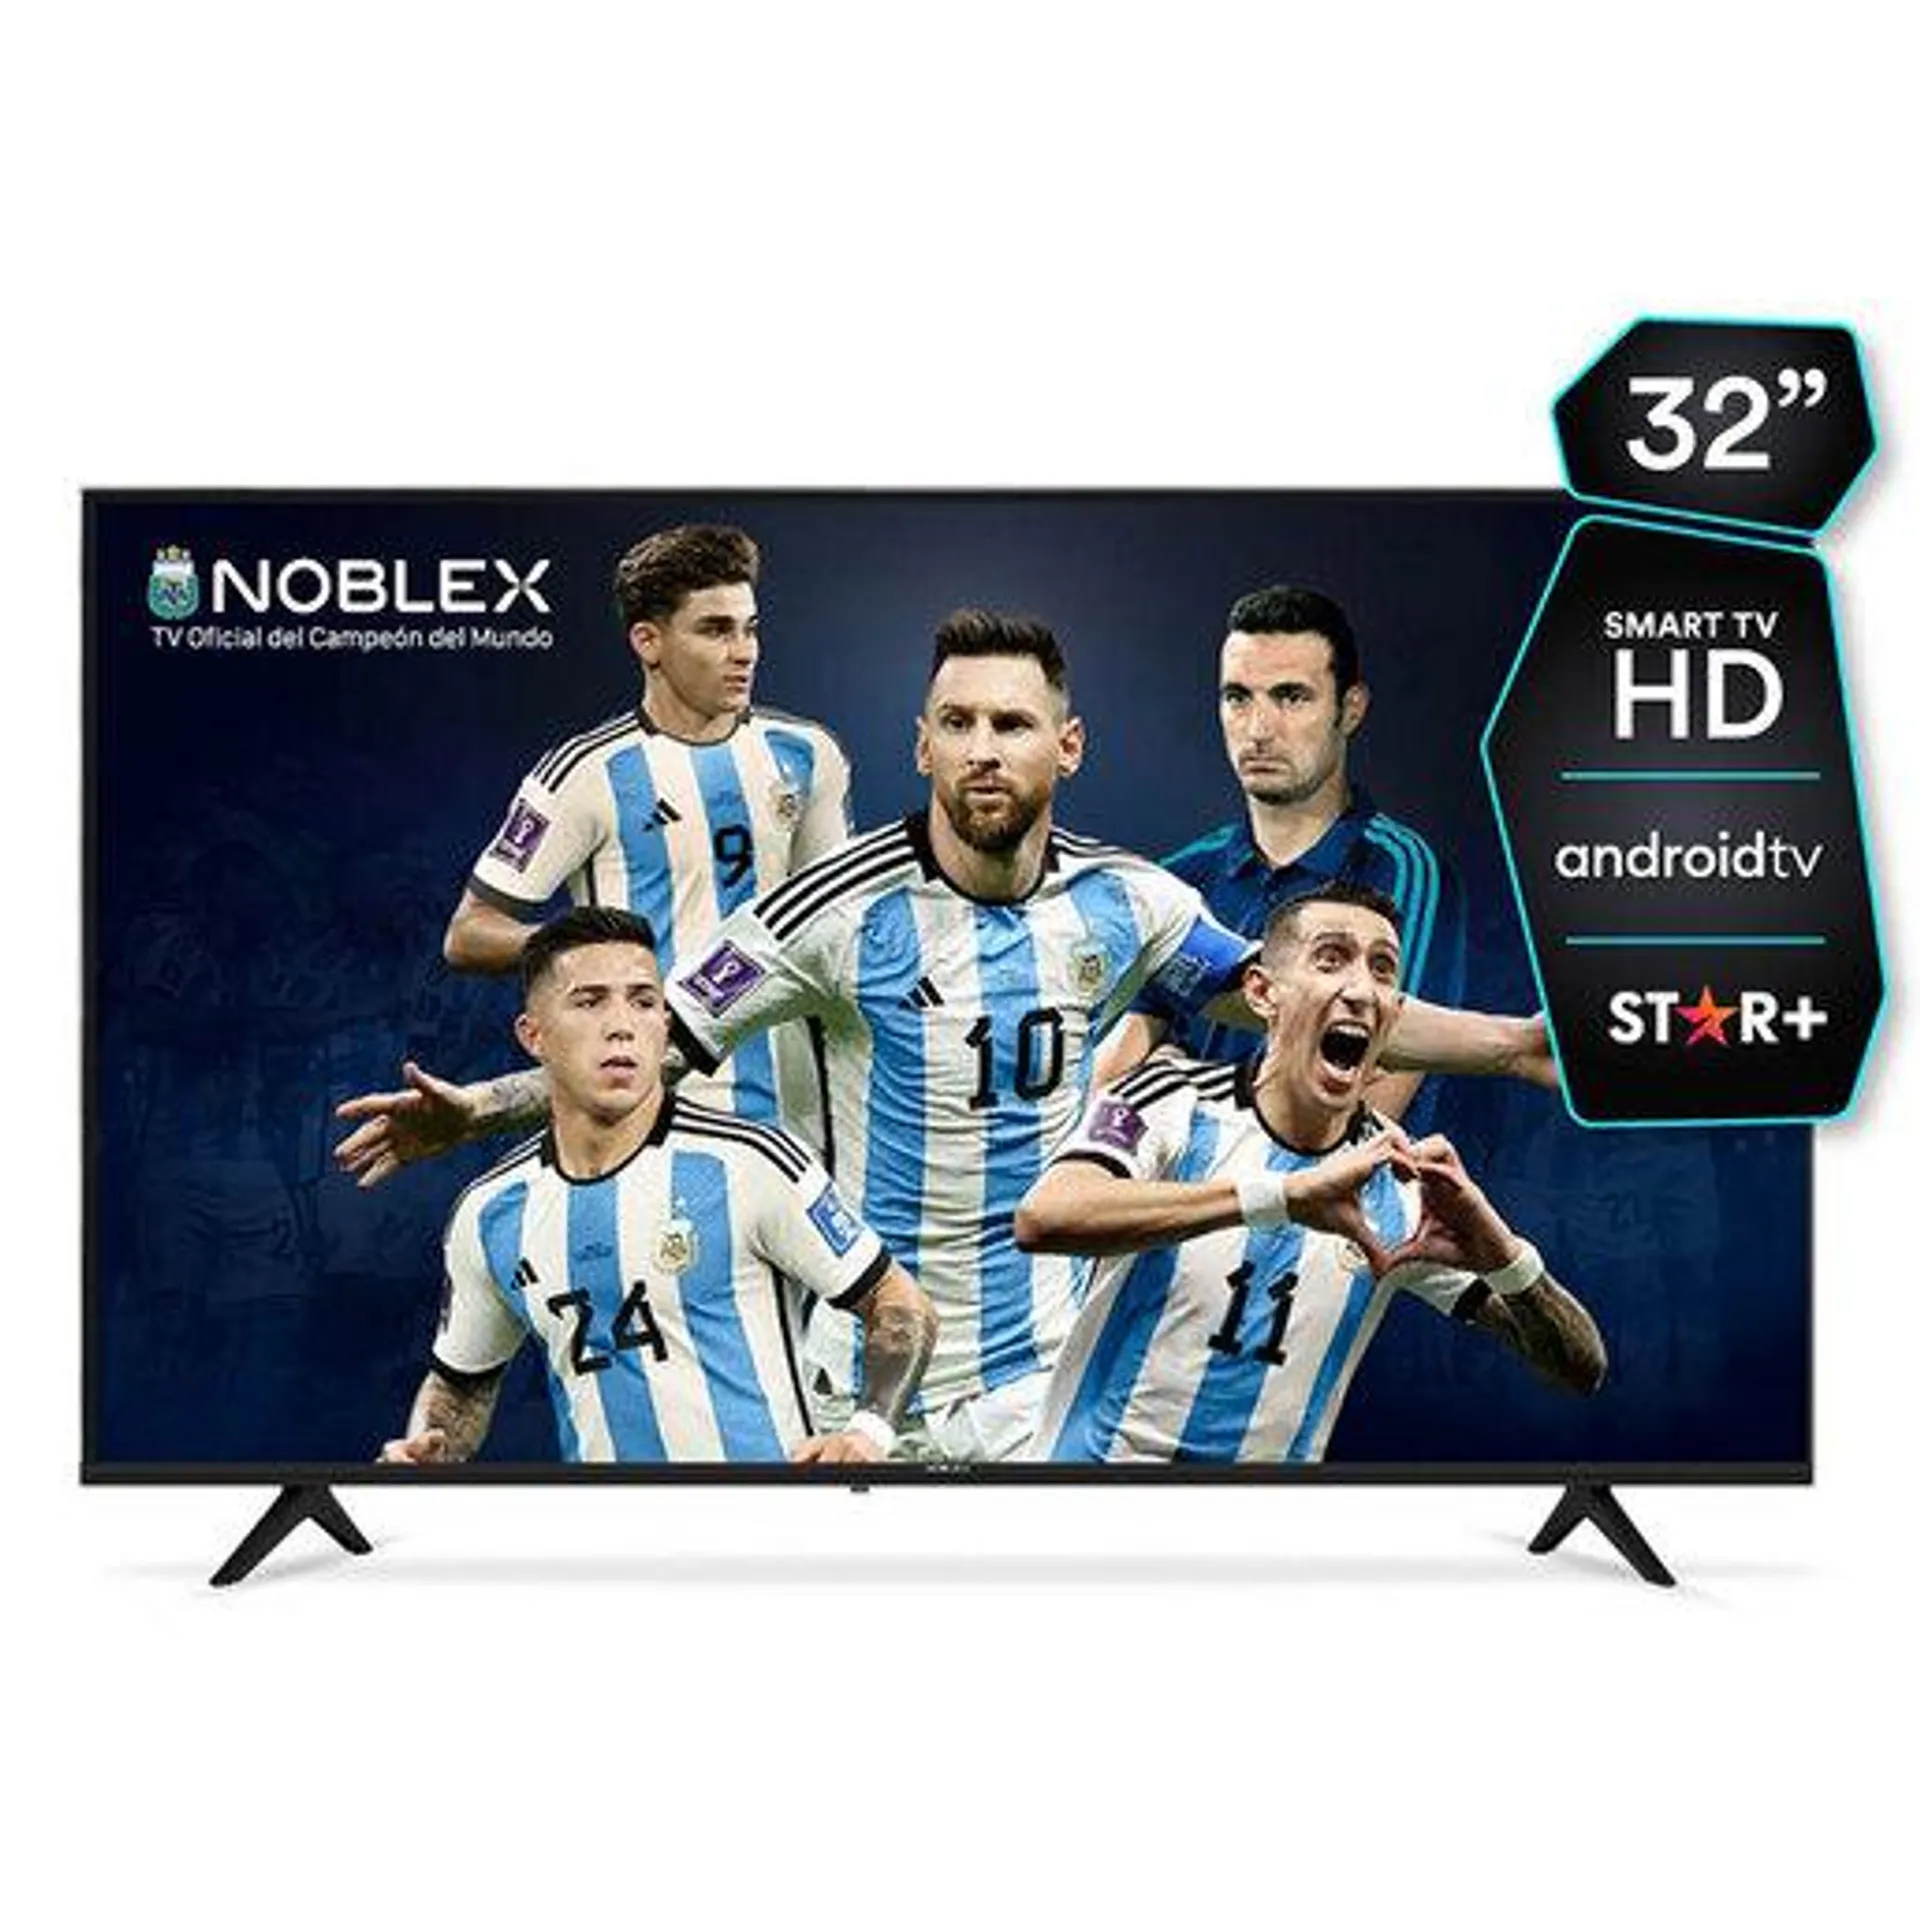 SMART TV NOBLEX 32 PULGADAS HD DX32X7000